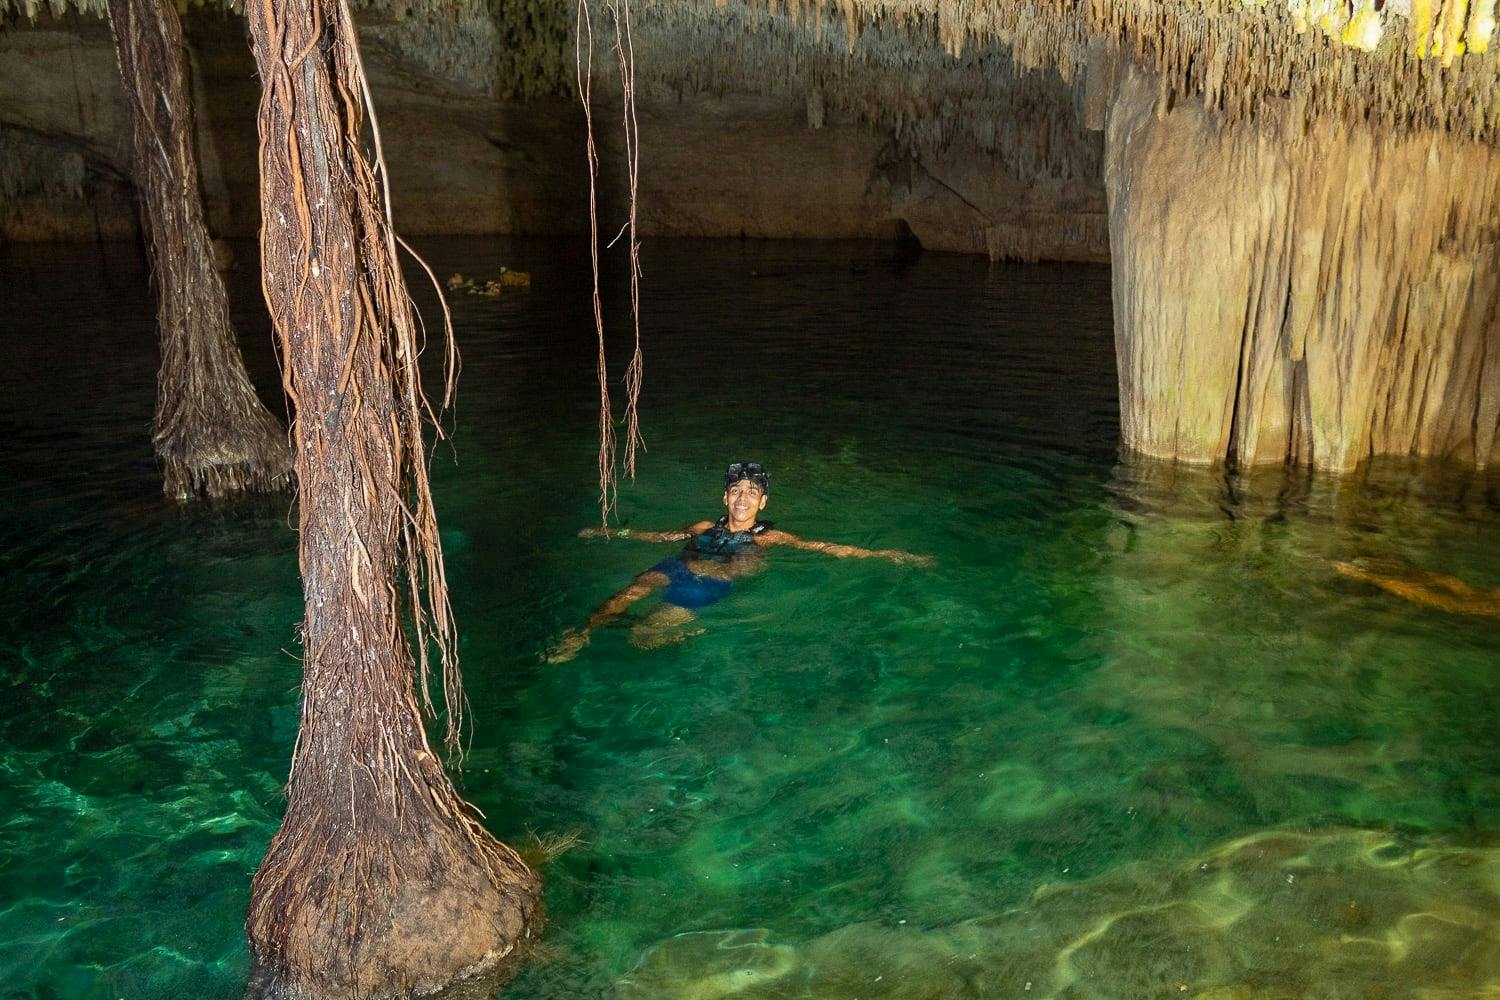 Nat Geo Day Tour: Journey to the Underworld, Maya Culture Through Cenotes